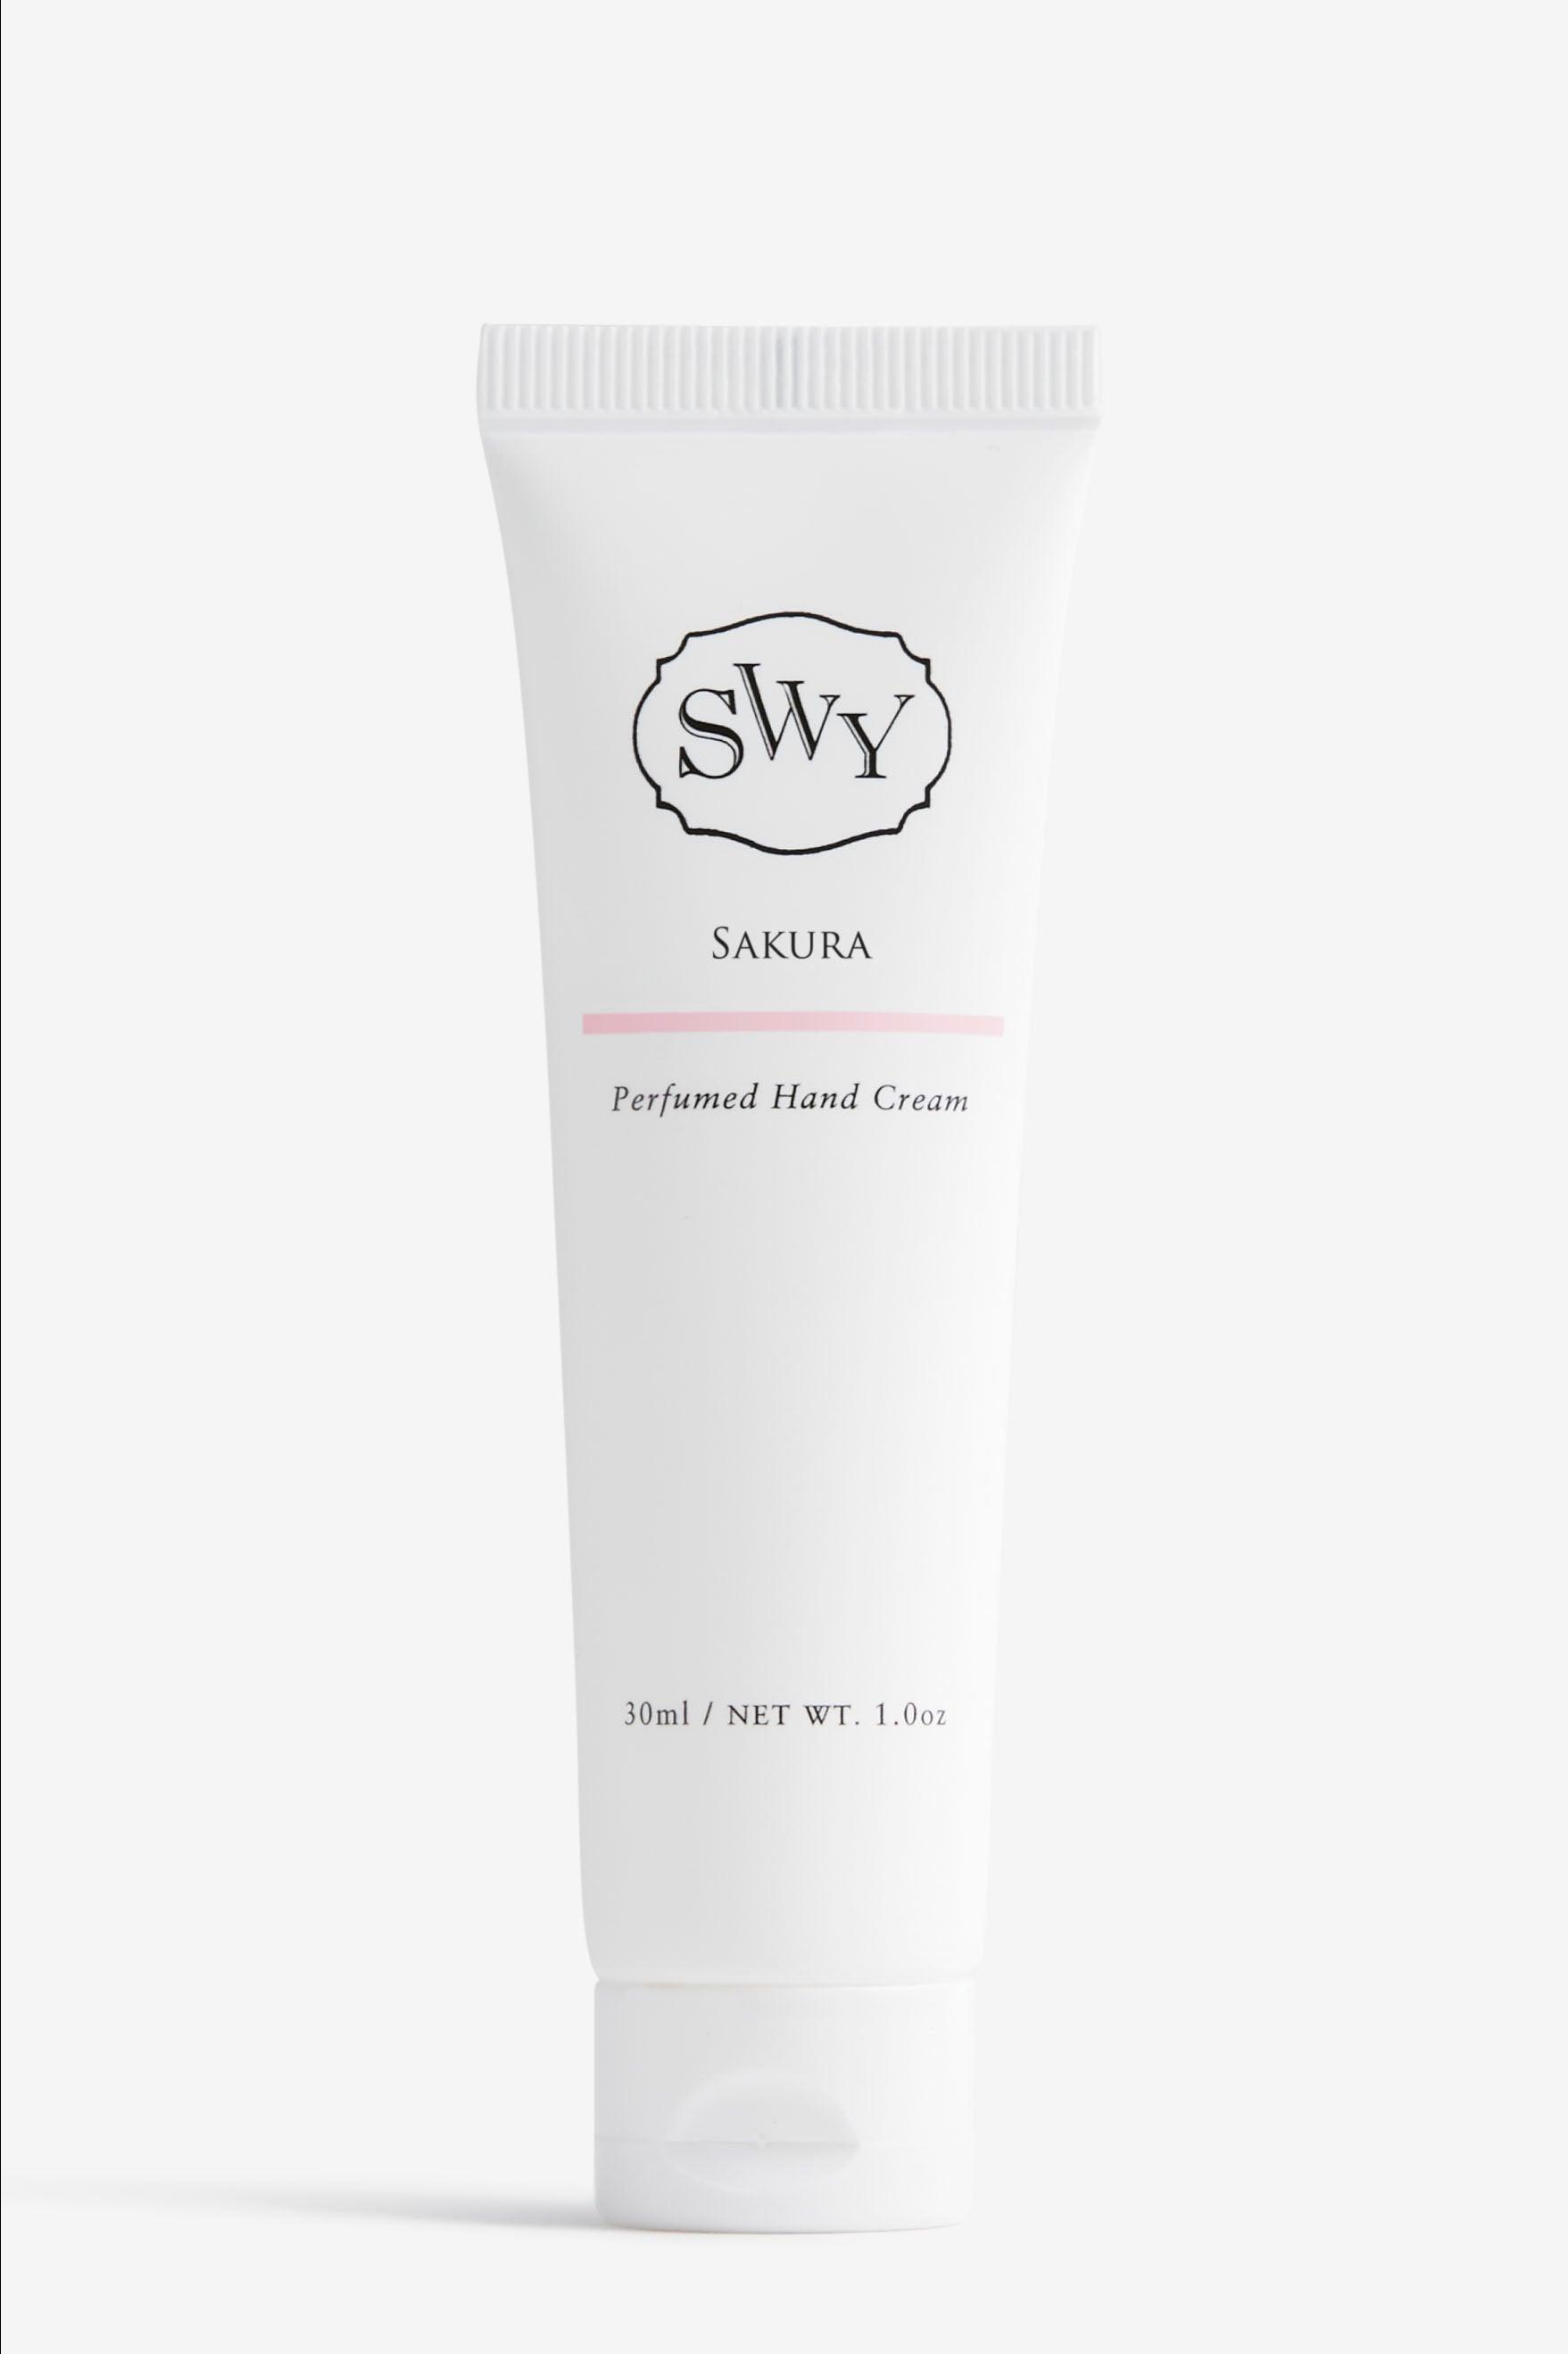 Hand Cream - pocket size - Sakura - SWY - Scent With You